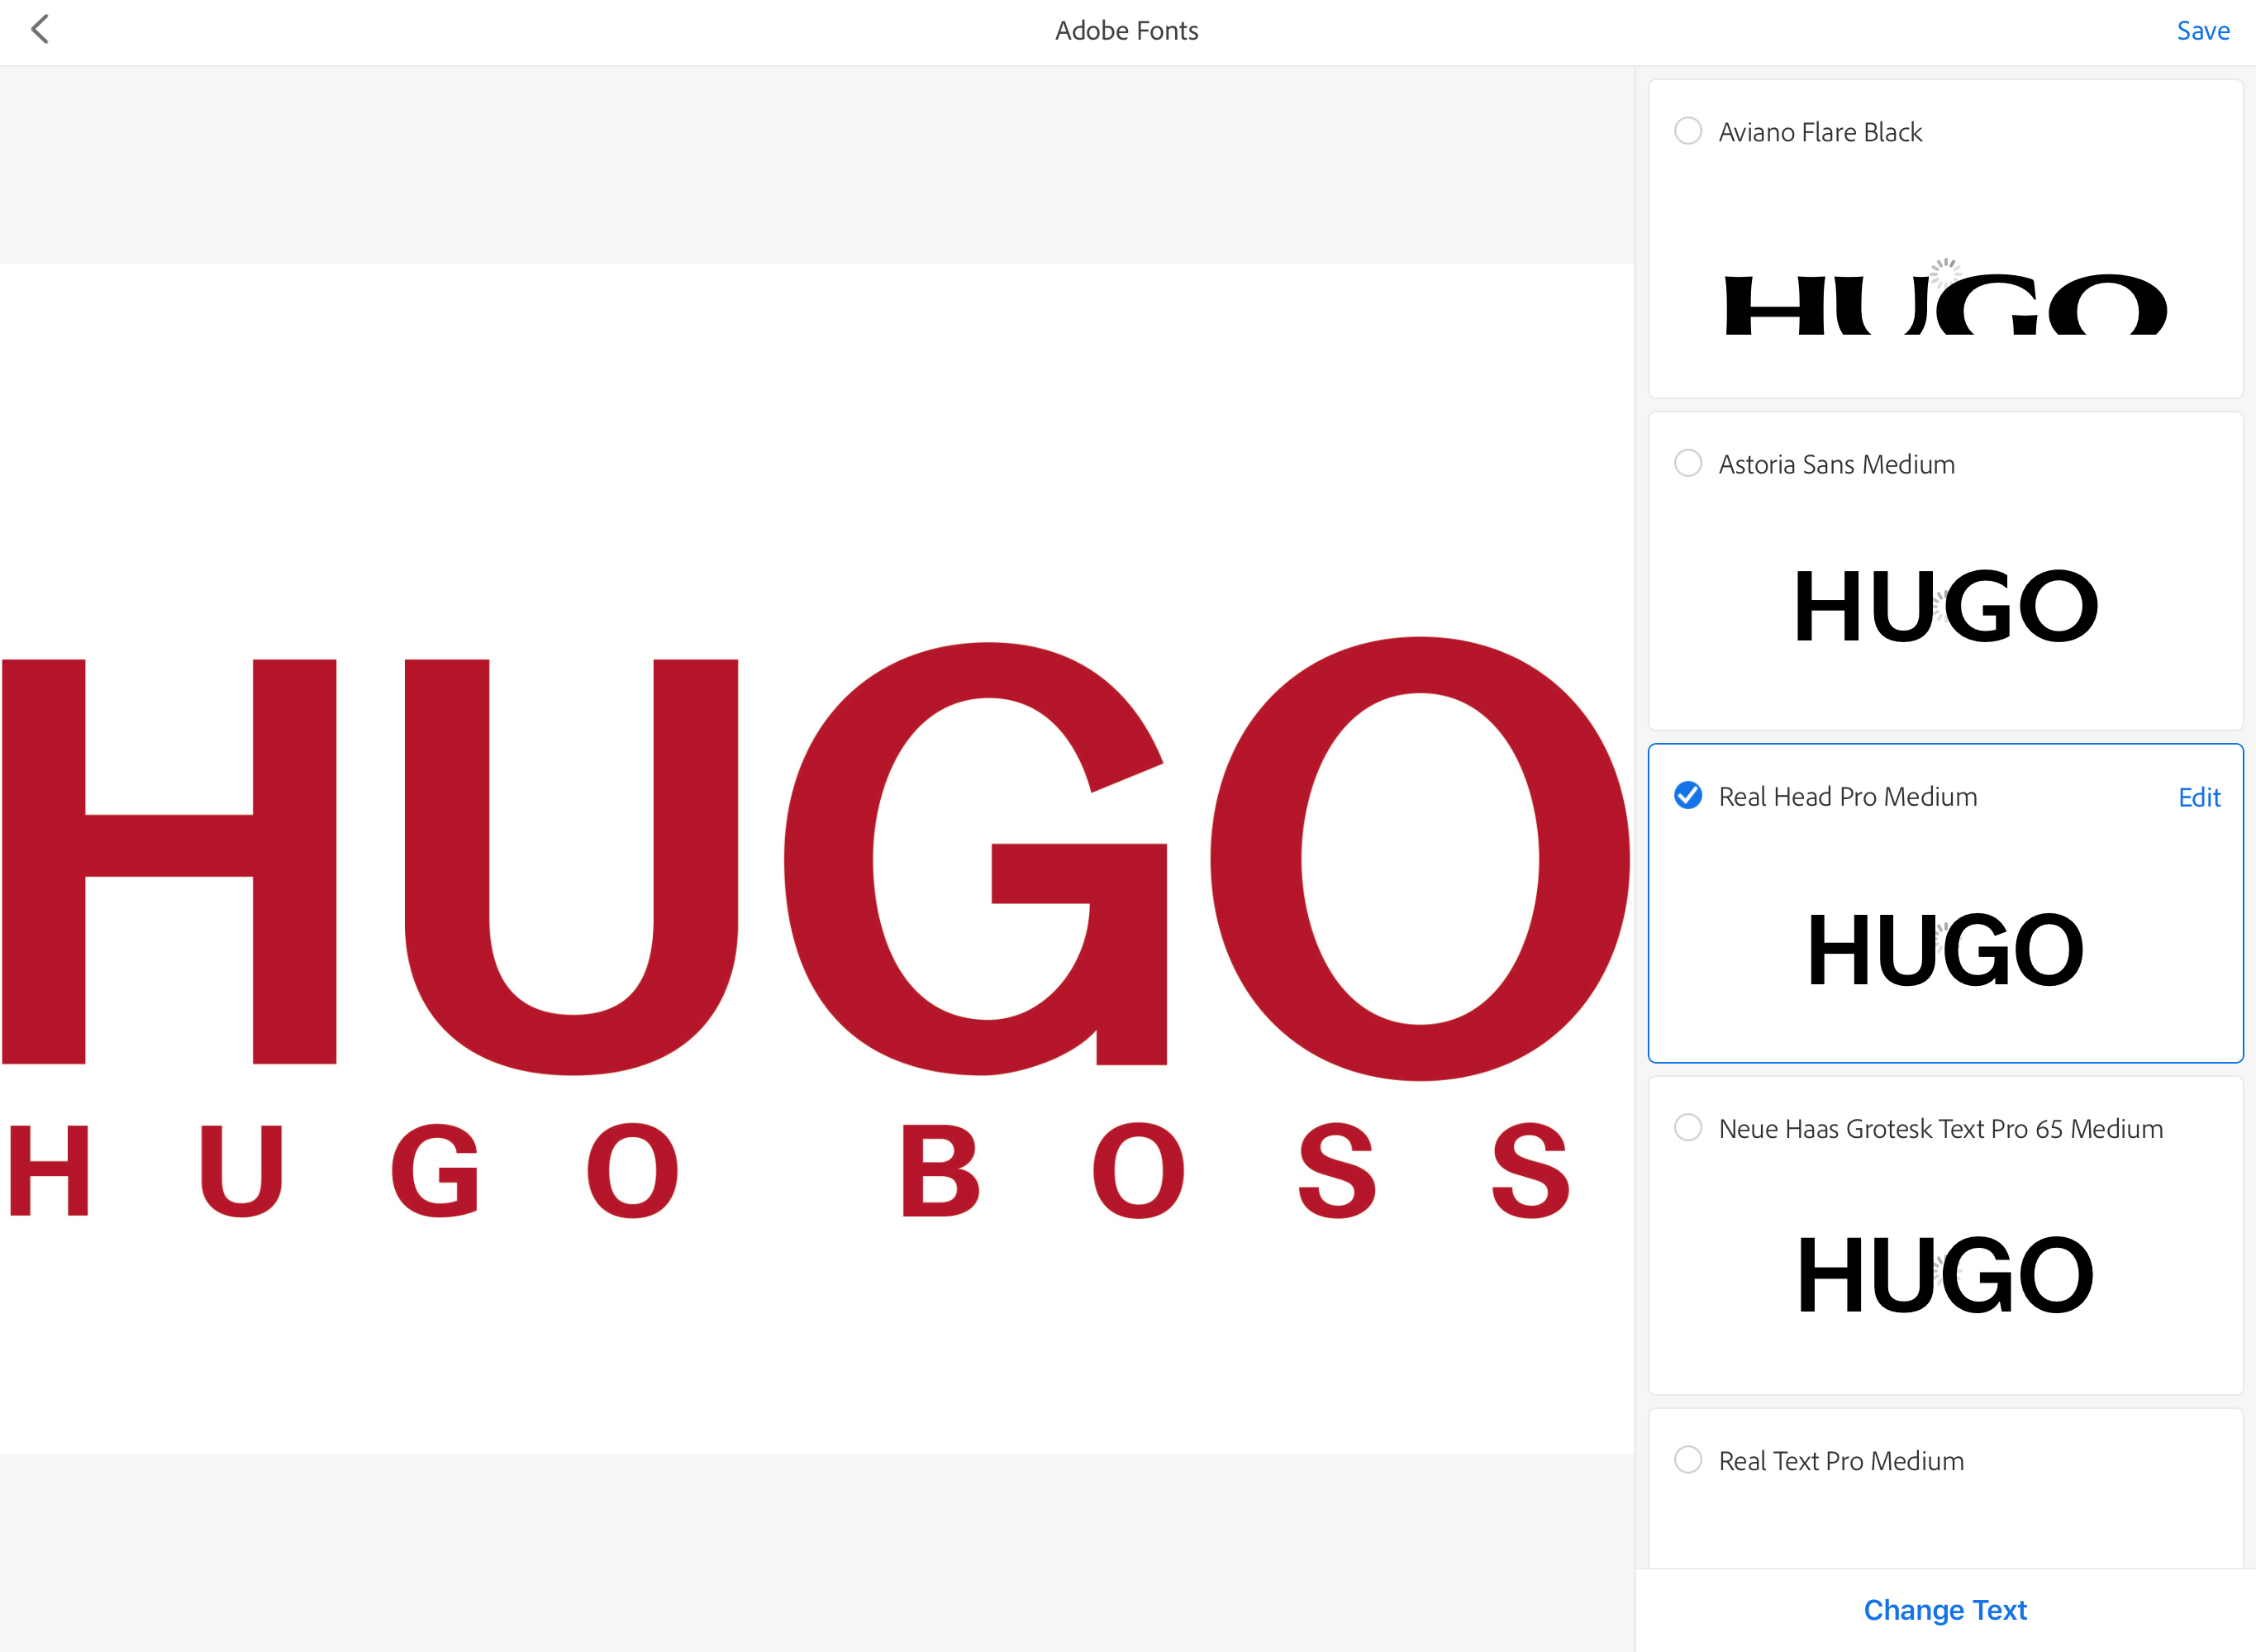 Hugo com. Hugo логотип. Логотип Hugo красный. Хьюго босс эмблема. Босс бренд.